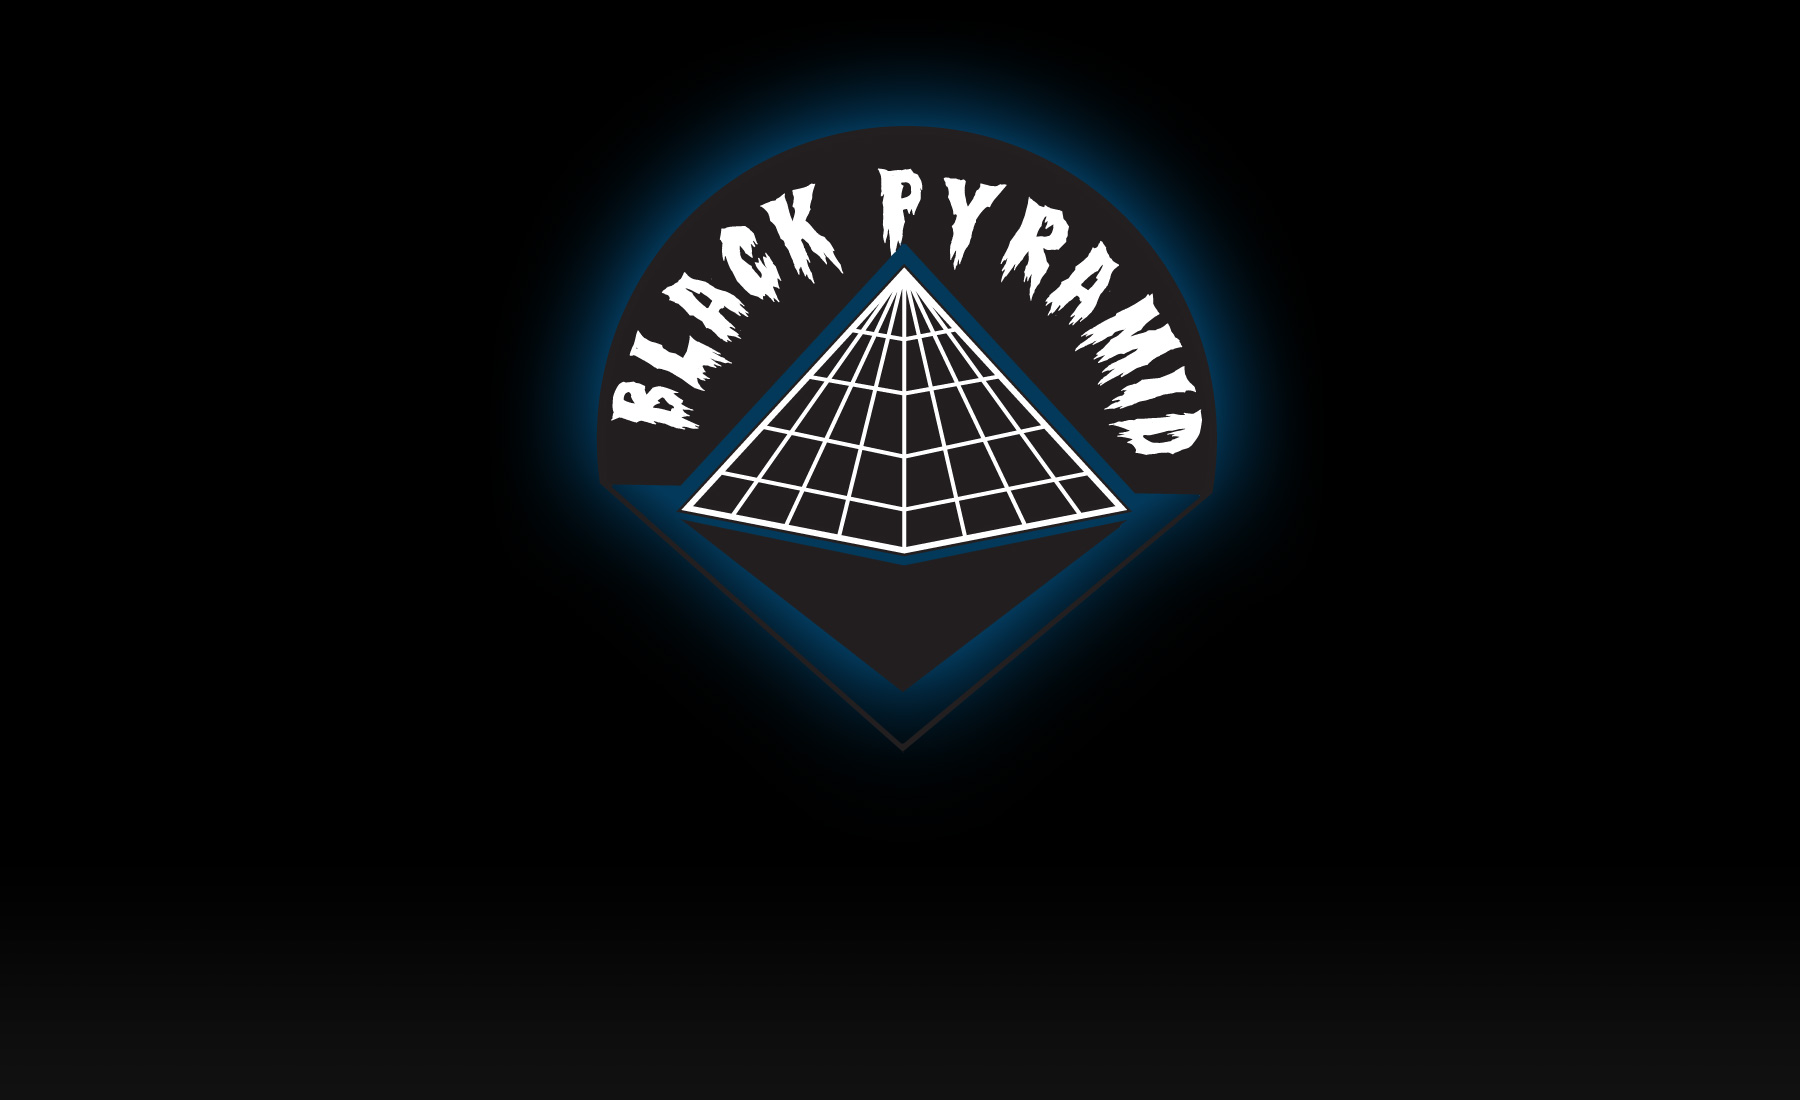 Black Pyramid Wallpapers